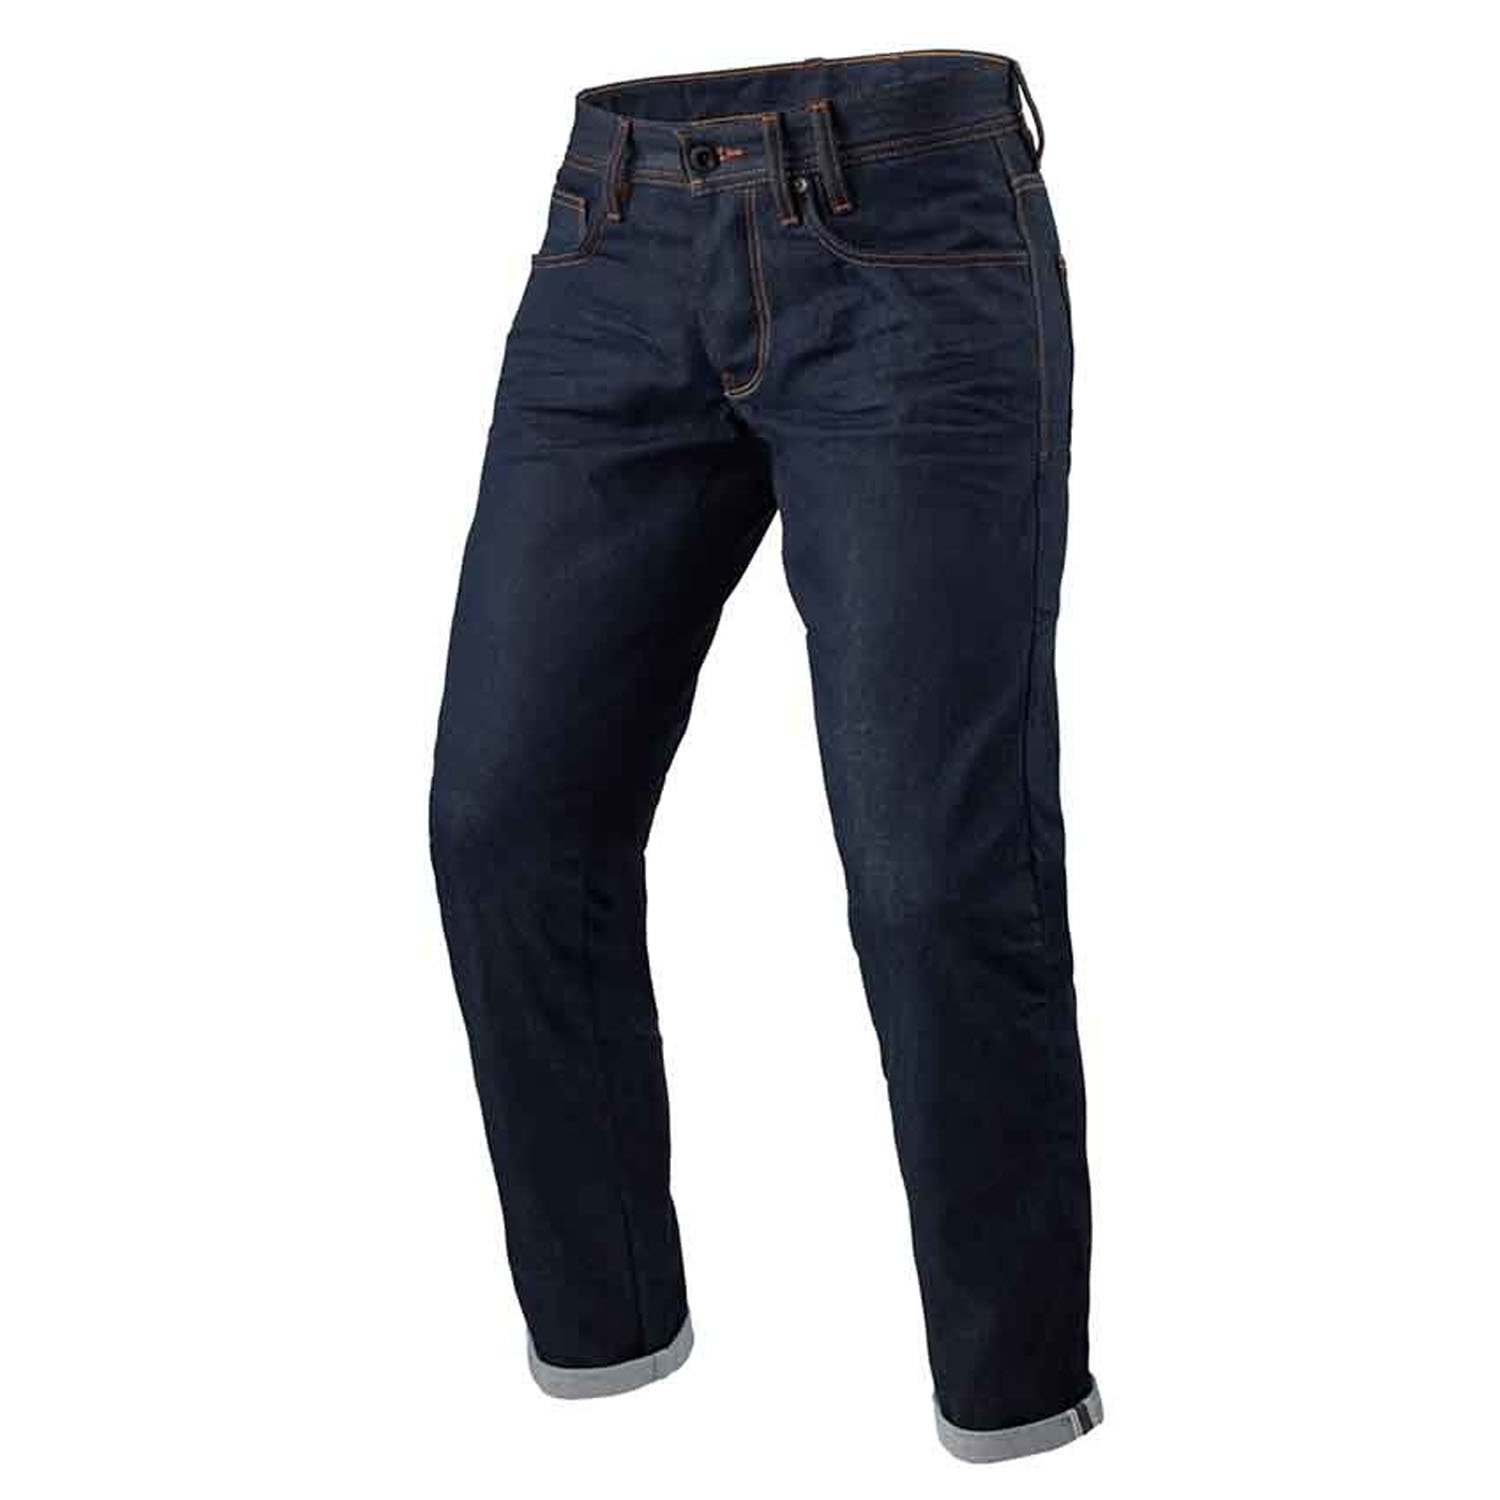 Image of REV'IT! Jeans Lewis Selvedge TF Dark Blue L36 Motorcycle Pants Größe L36/W36